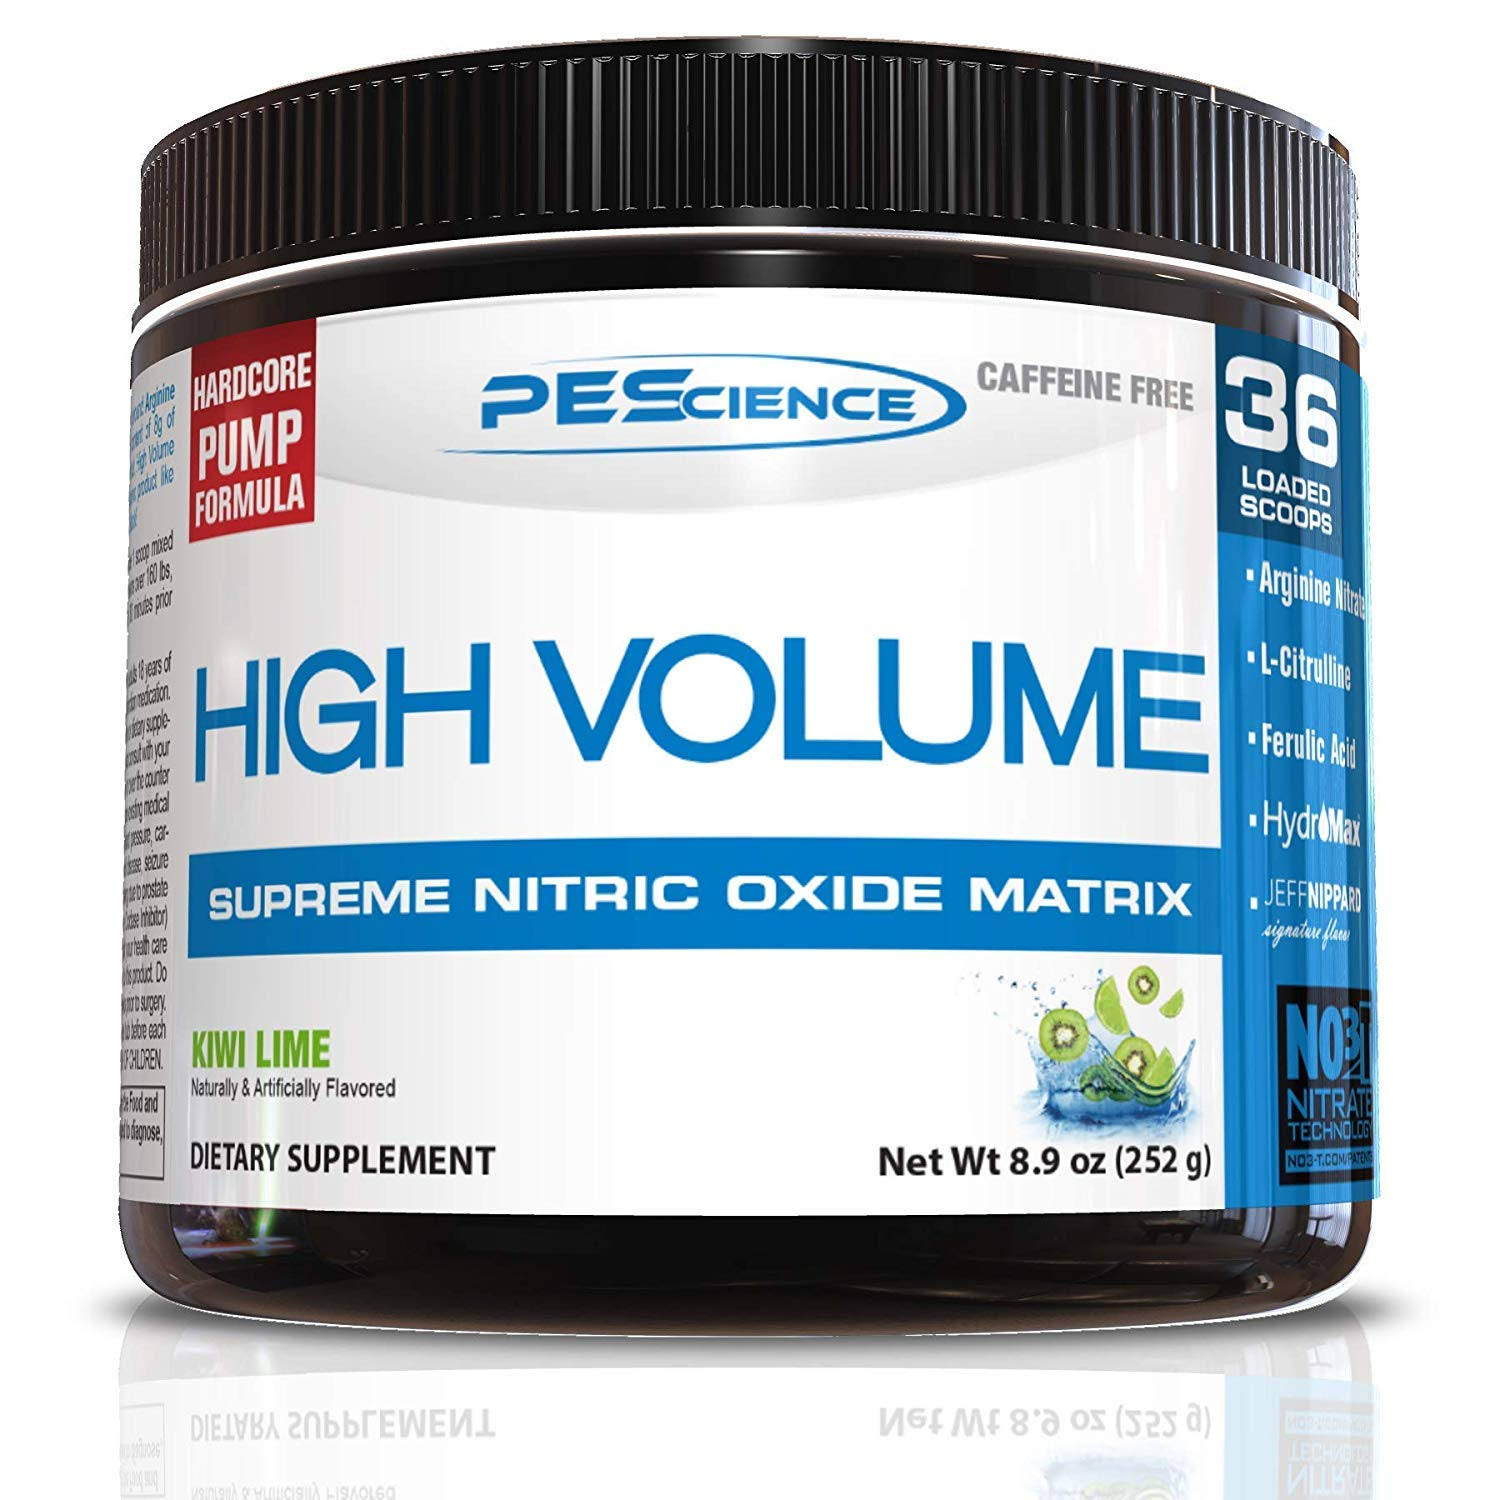 Pescience High Volume Supreme Nitric Oxide Matrix Supplement - 252g